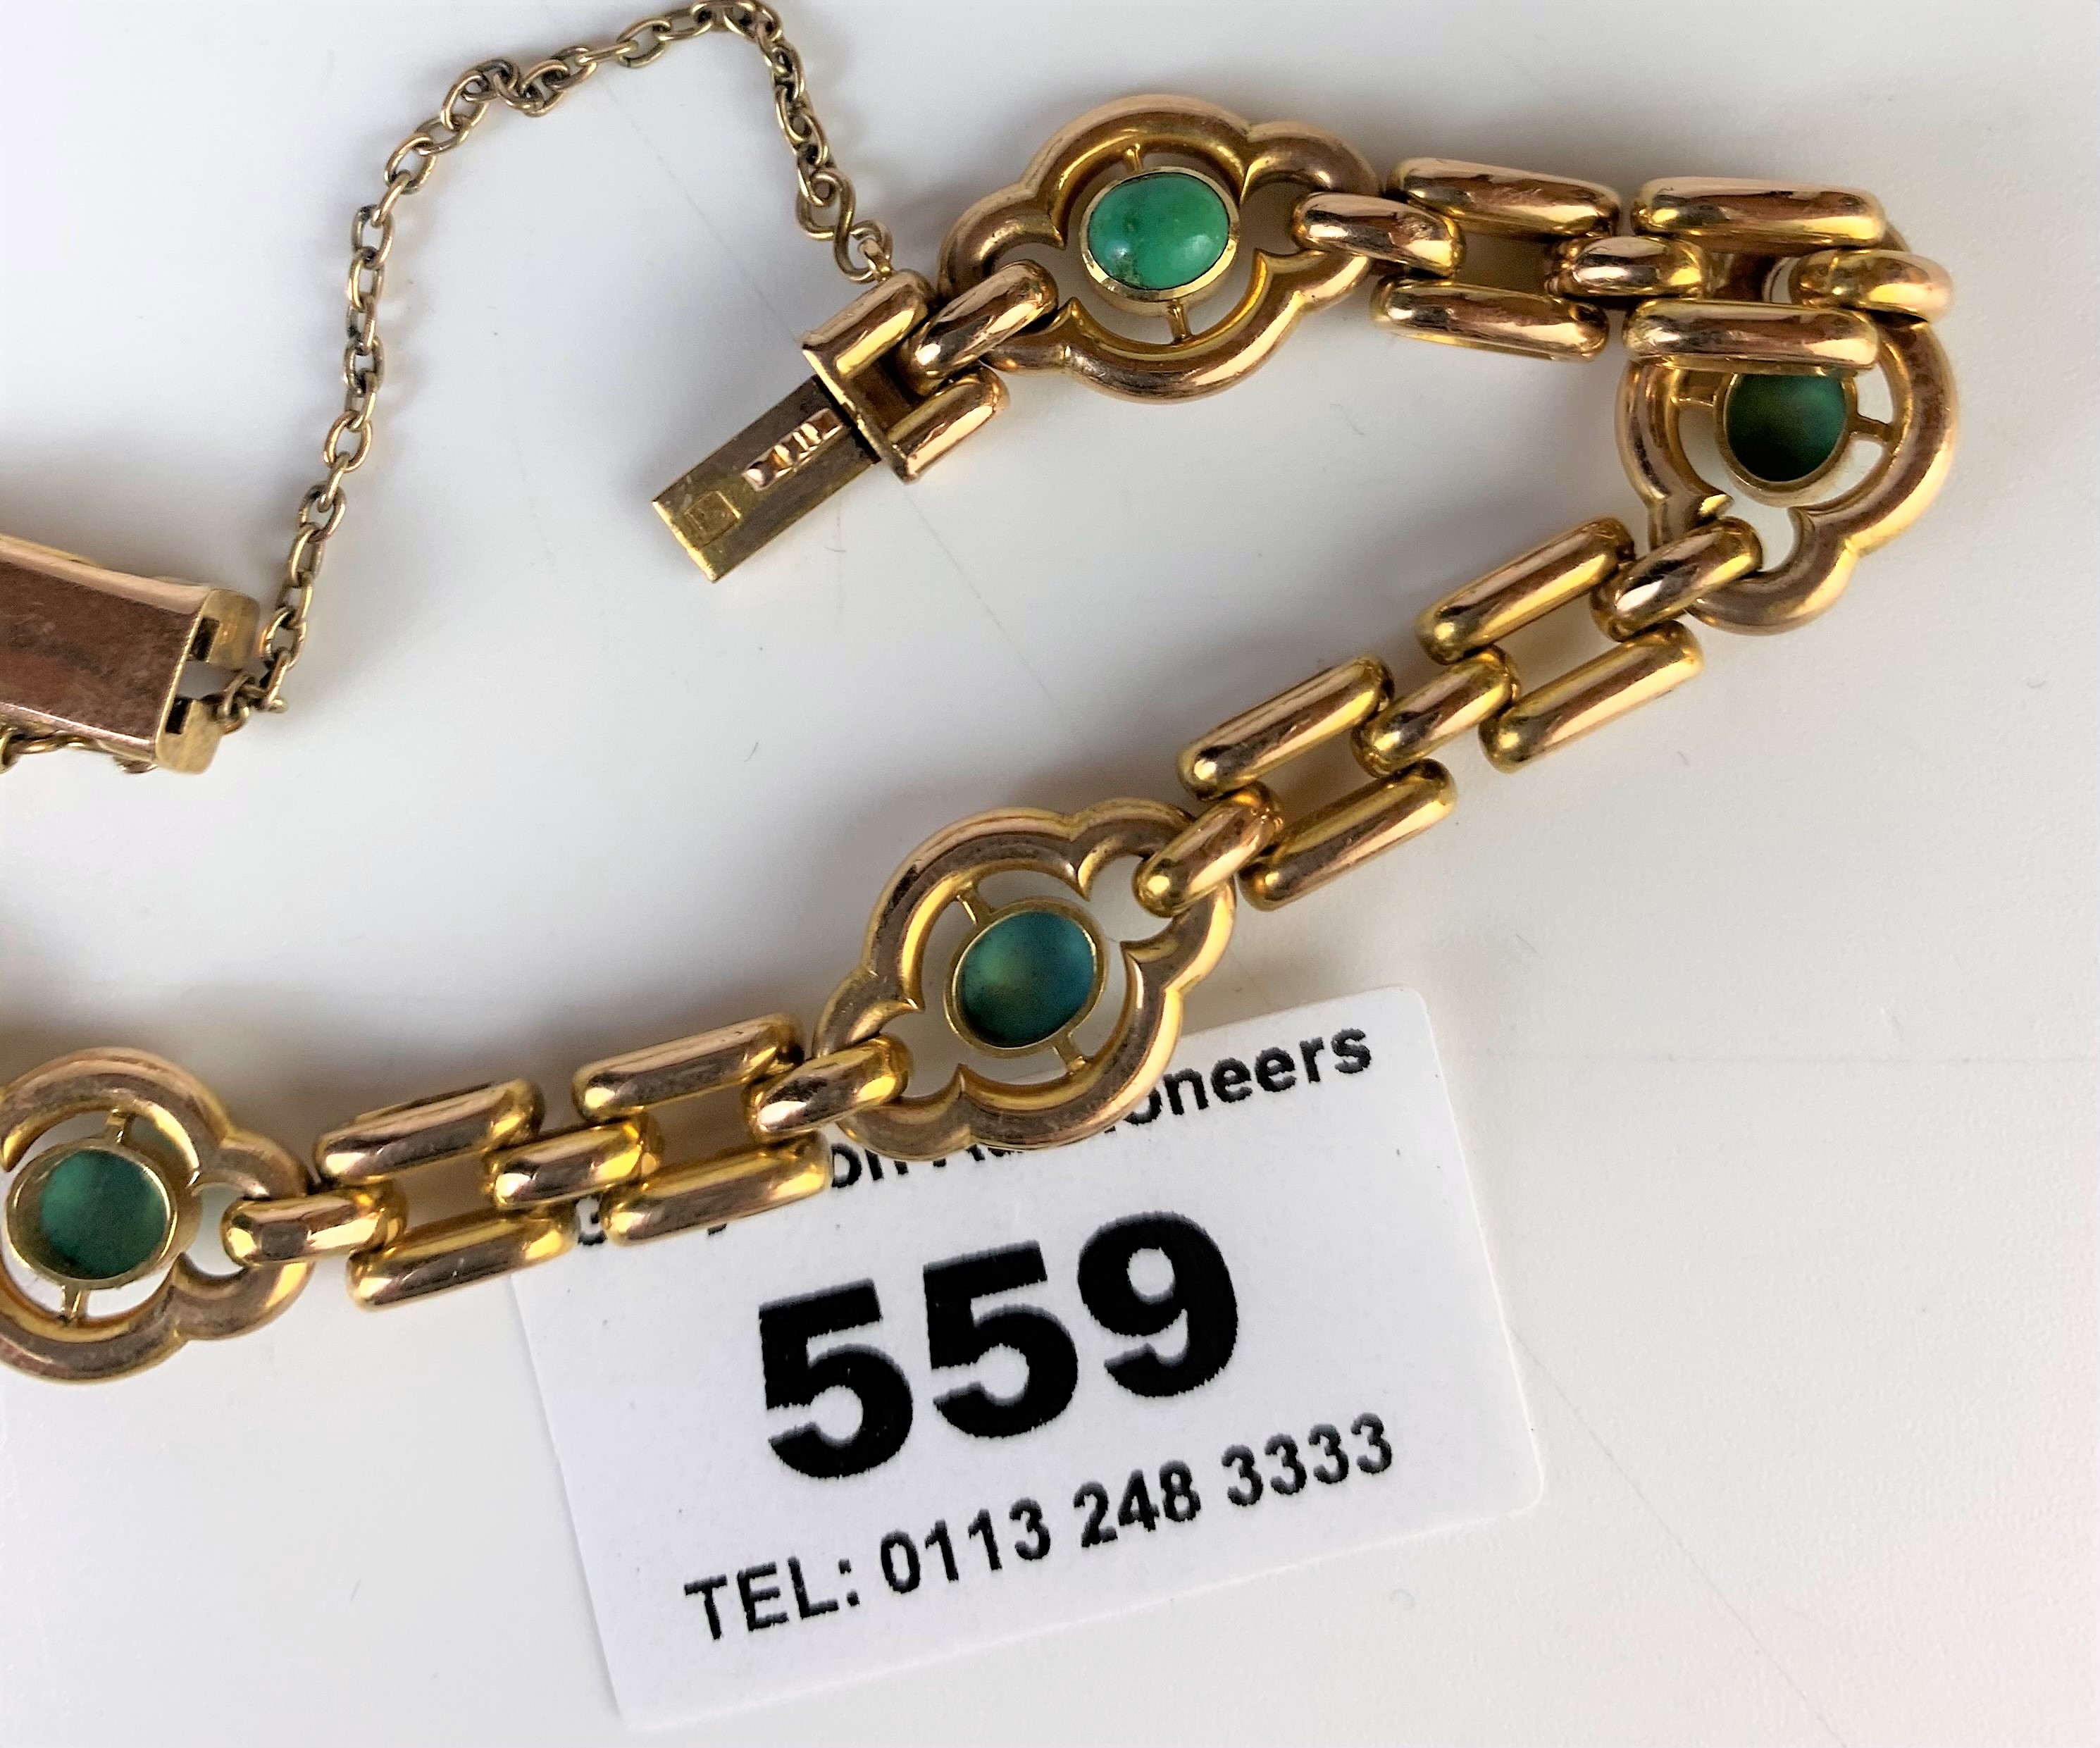 15k gold and turquoise stone bracelet, w: 14.3 gms, length 7” - Image 4 of 4